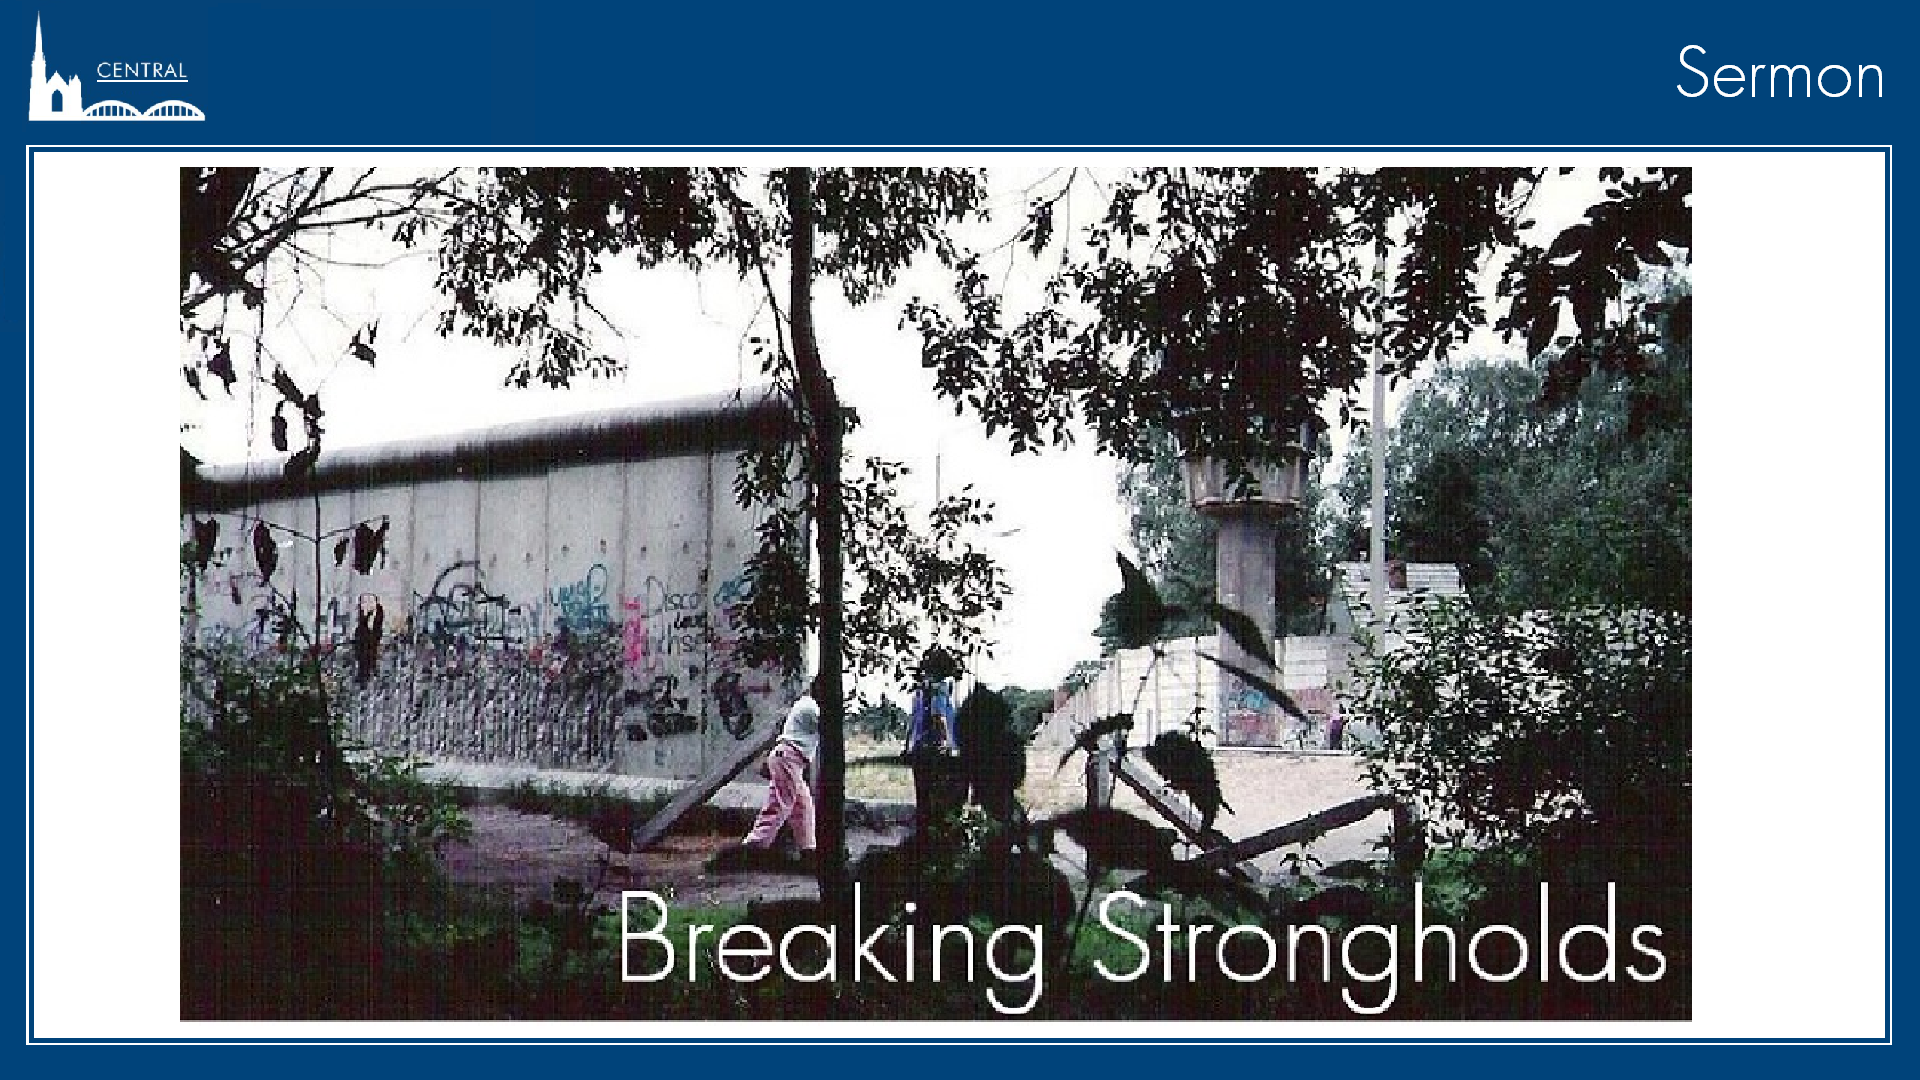 Breaking strongholds - breaking down walls